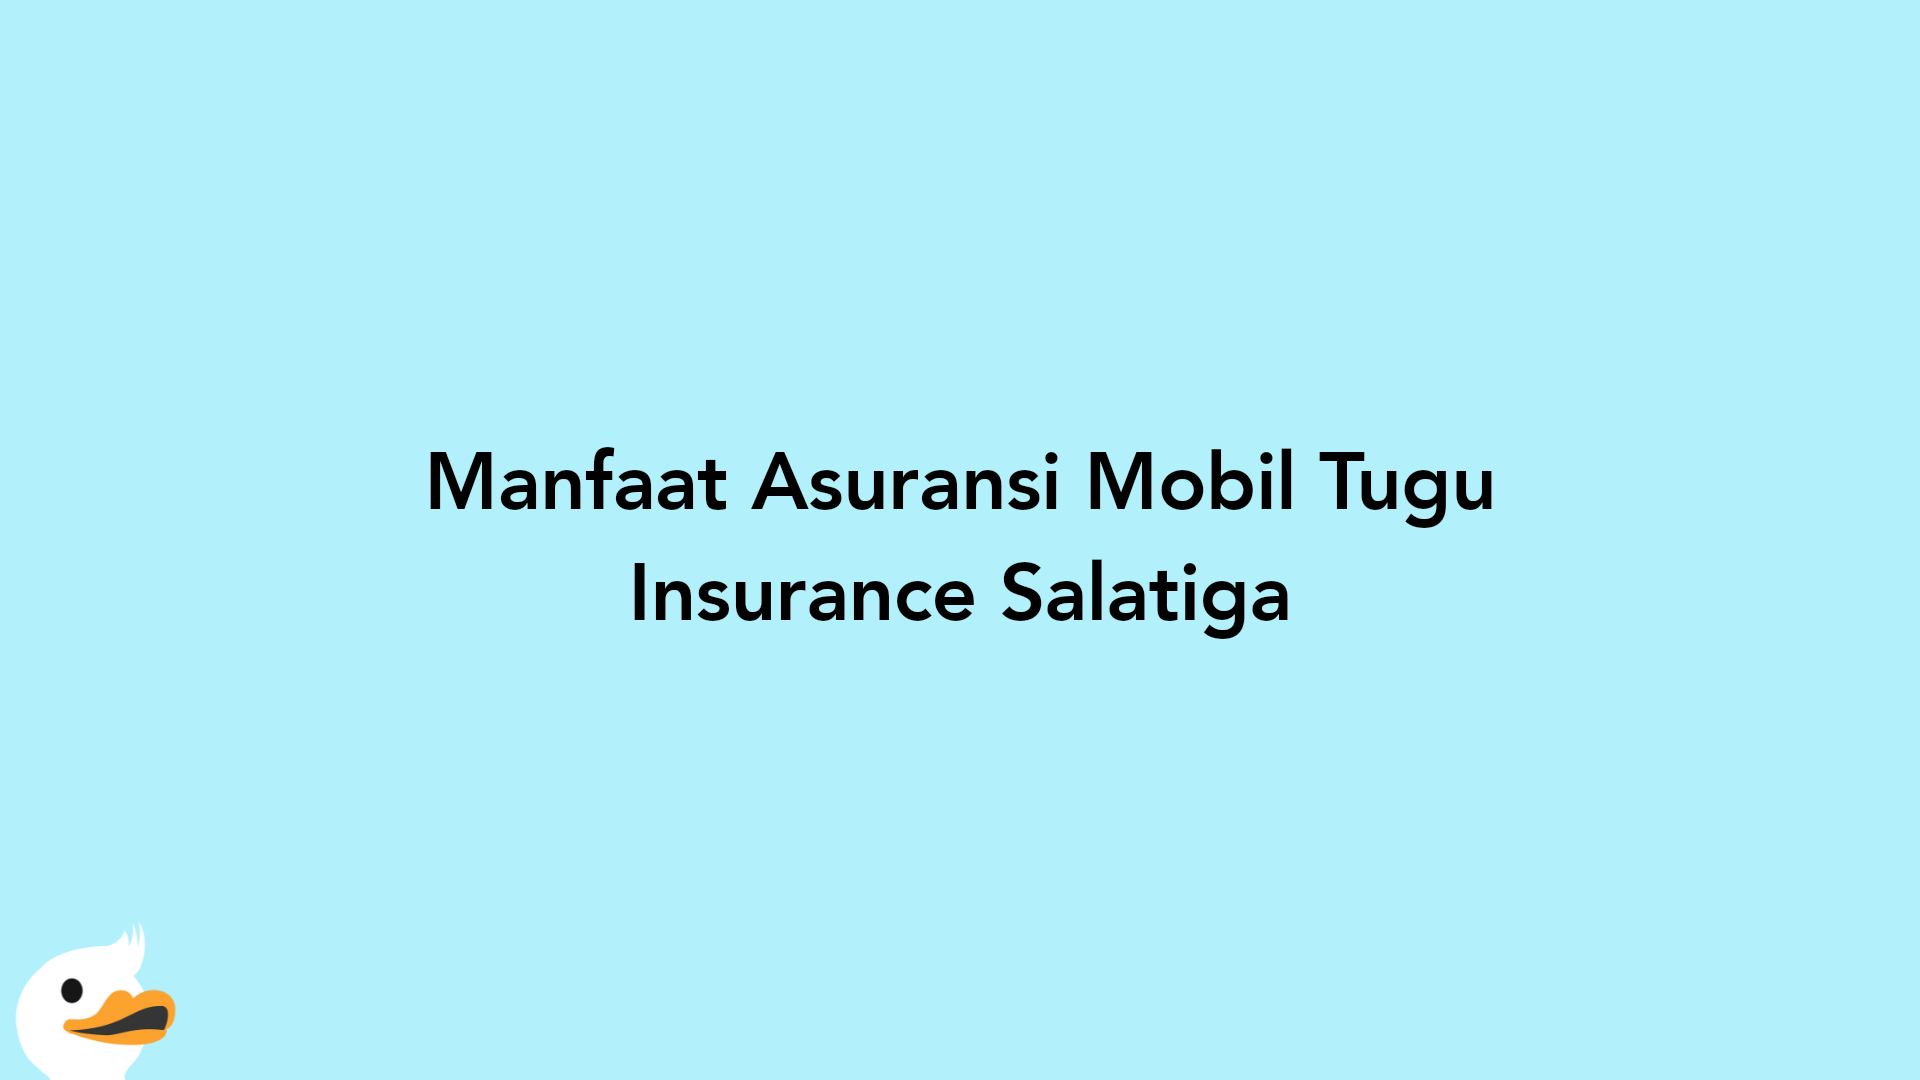 Manfaat Asuransi Mobil Tugu Insurance Salatiga